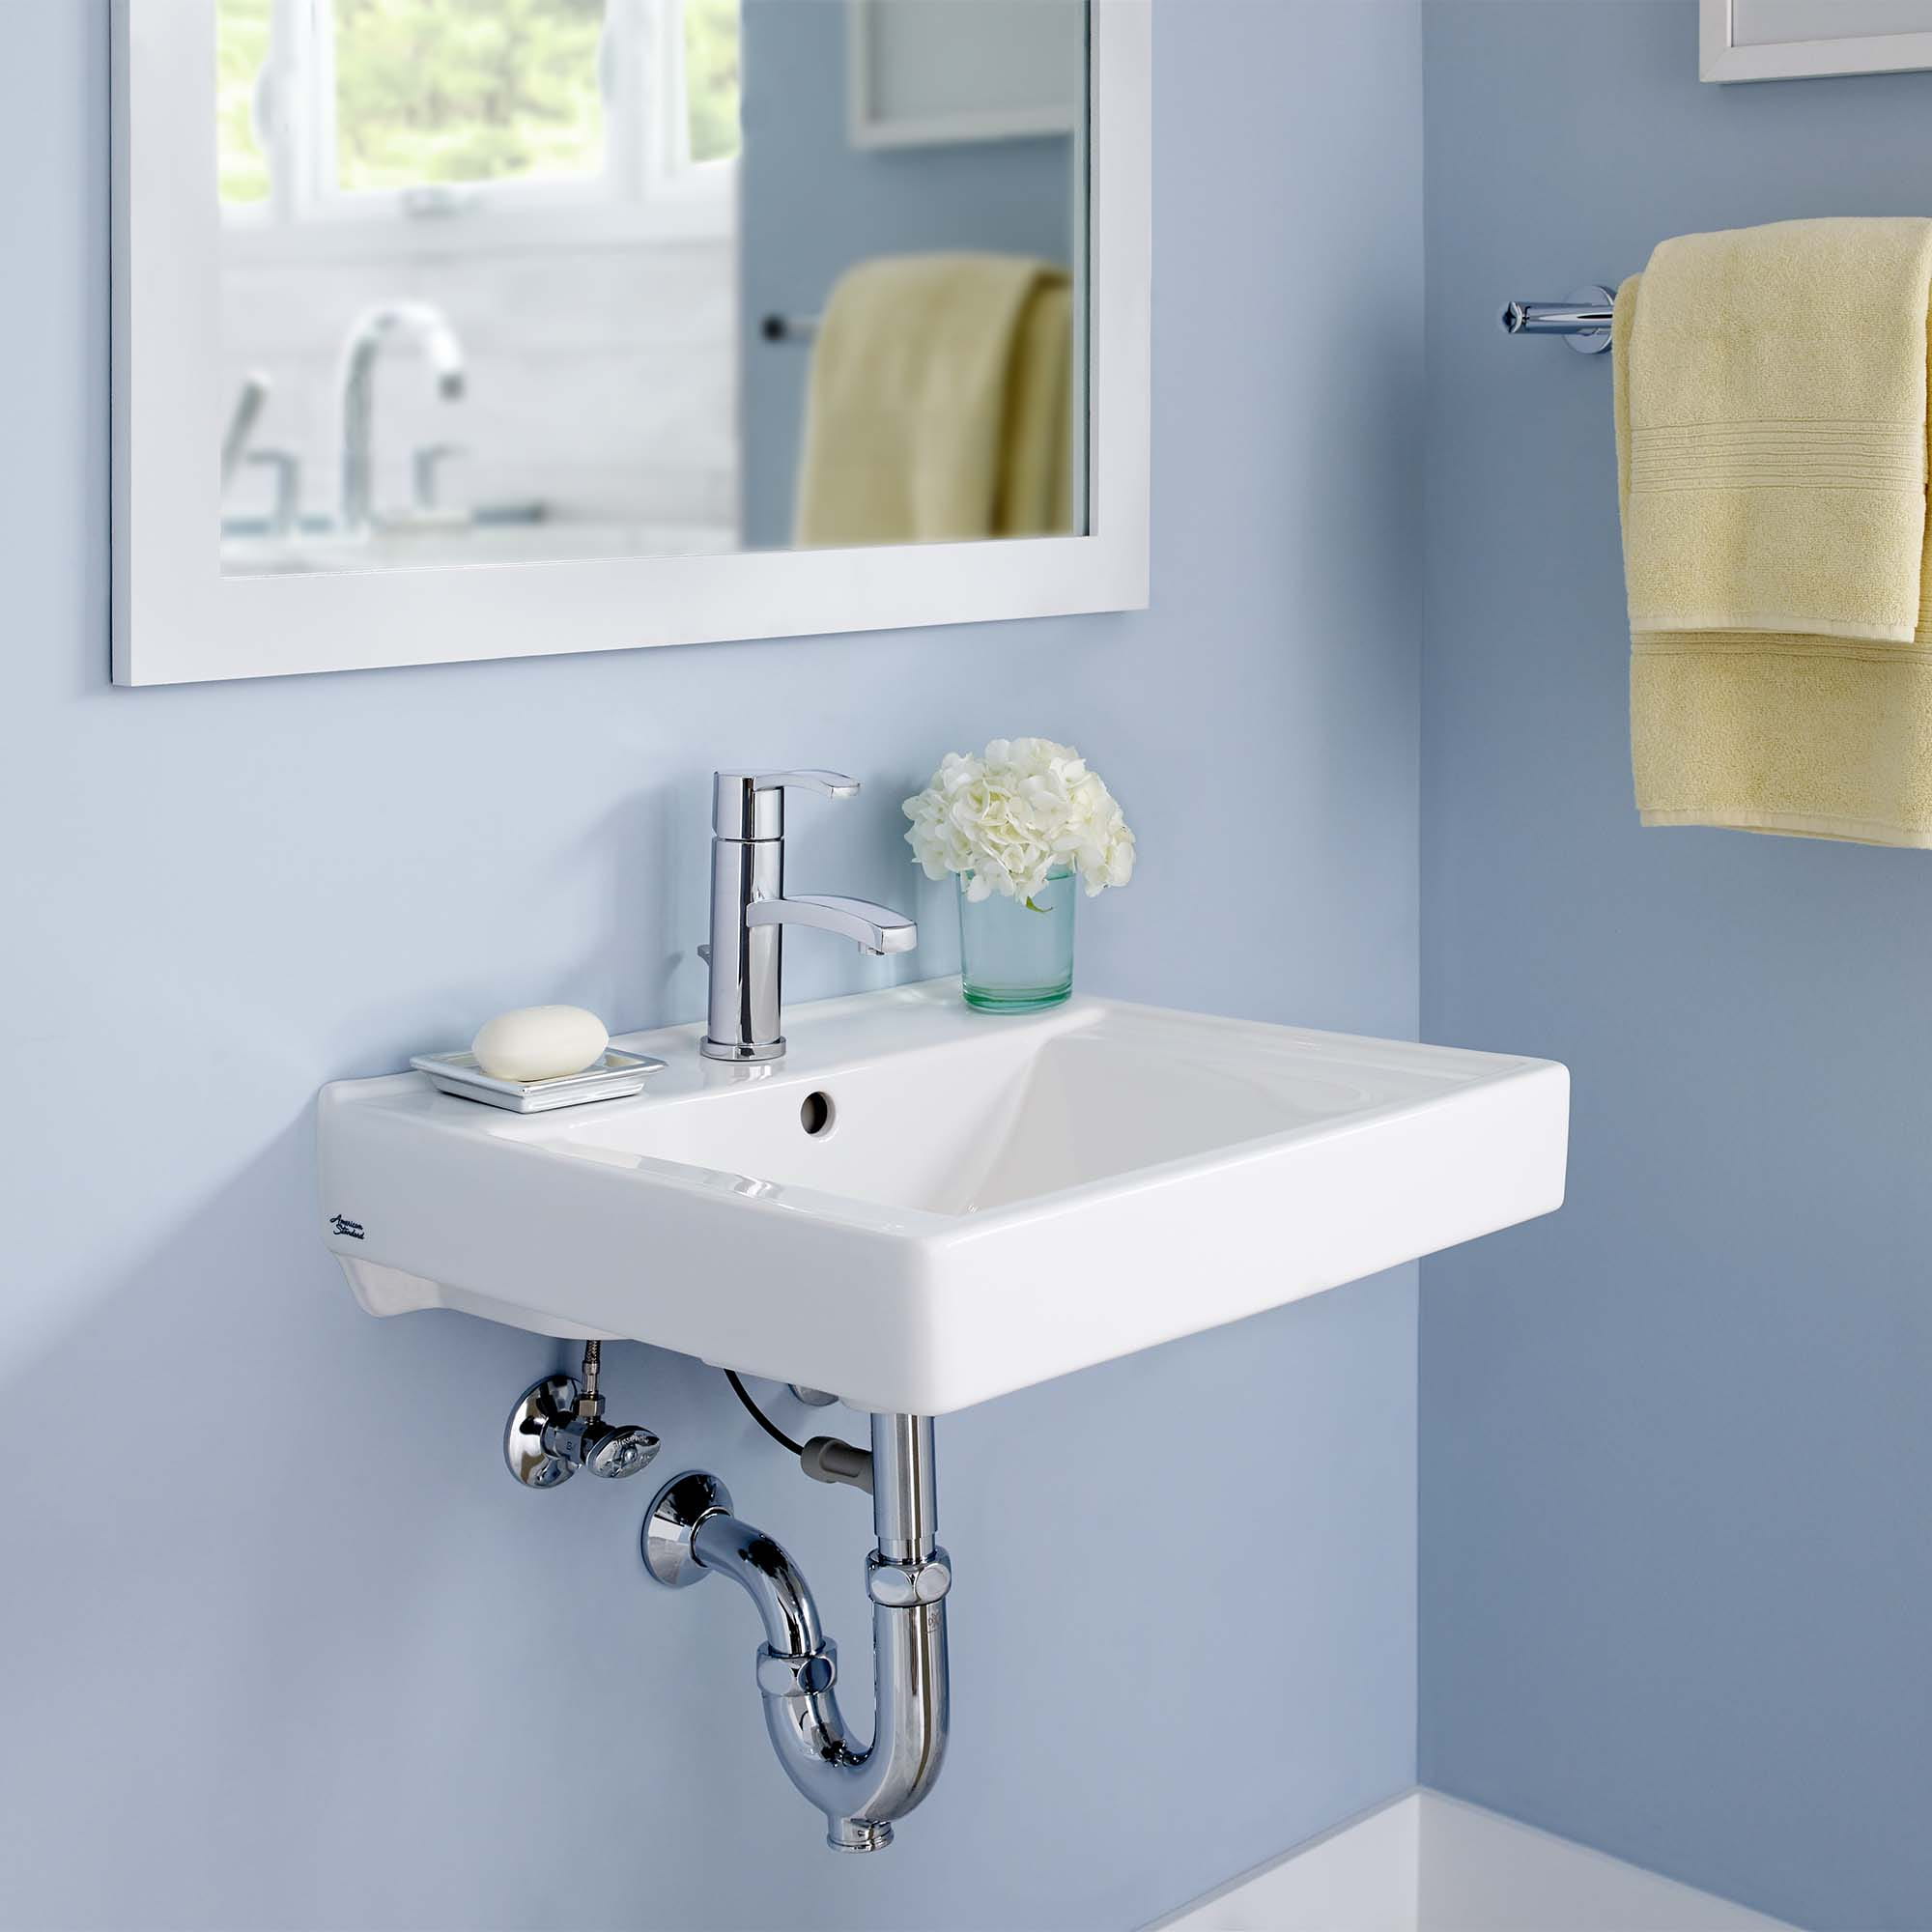 Berwick® Single Hole Single-Handle Bathroom Faucet
1.2 gpm/4.5 L/min With Lever Handle